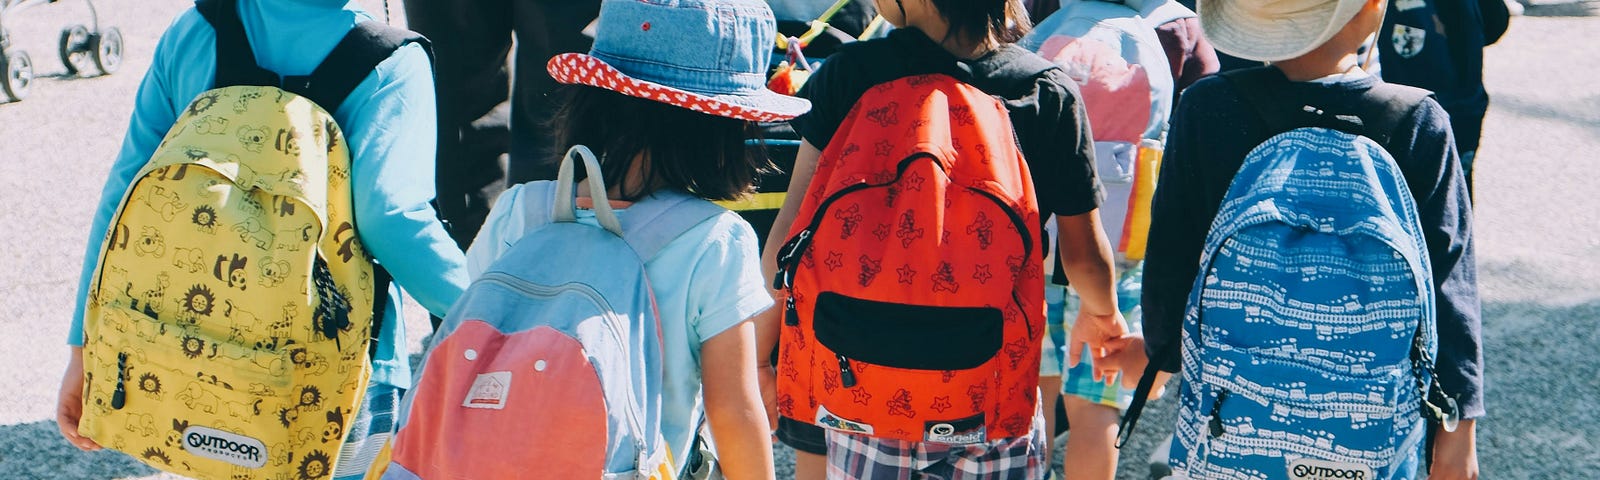 School children wearing hats and backpacks.